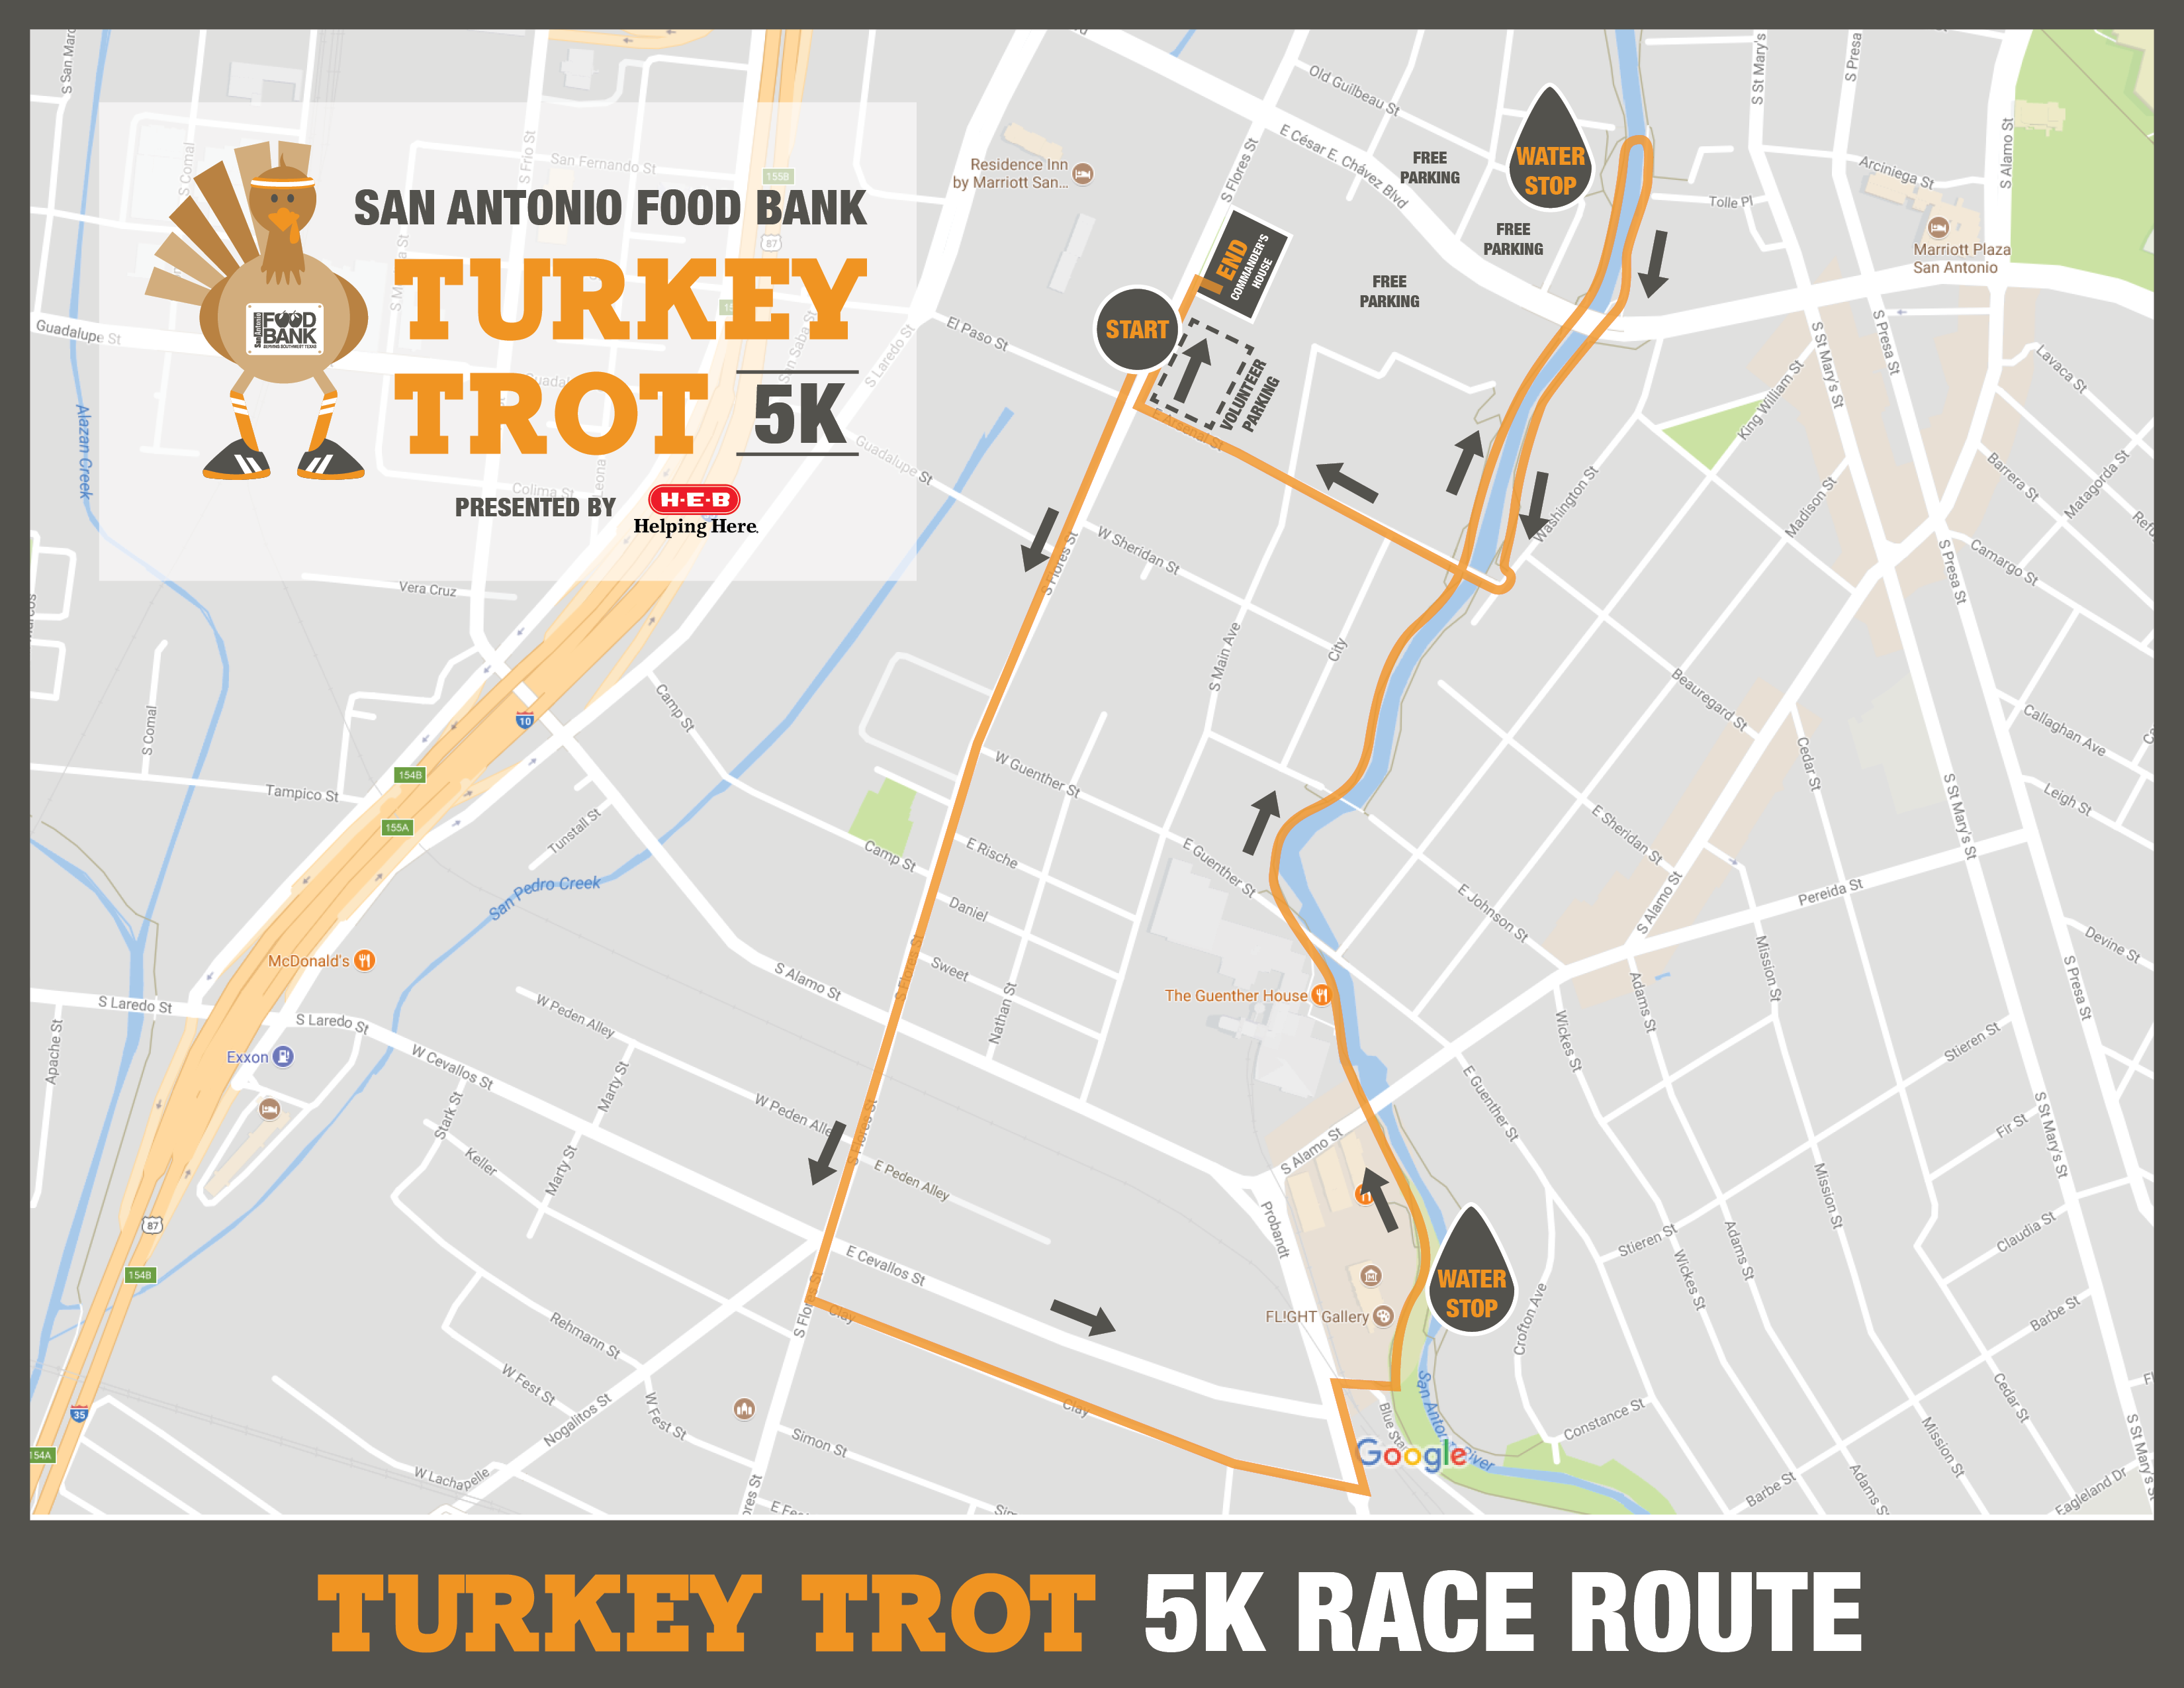 Turkey Trot Race Route Map San Antonio Food Bank